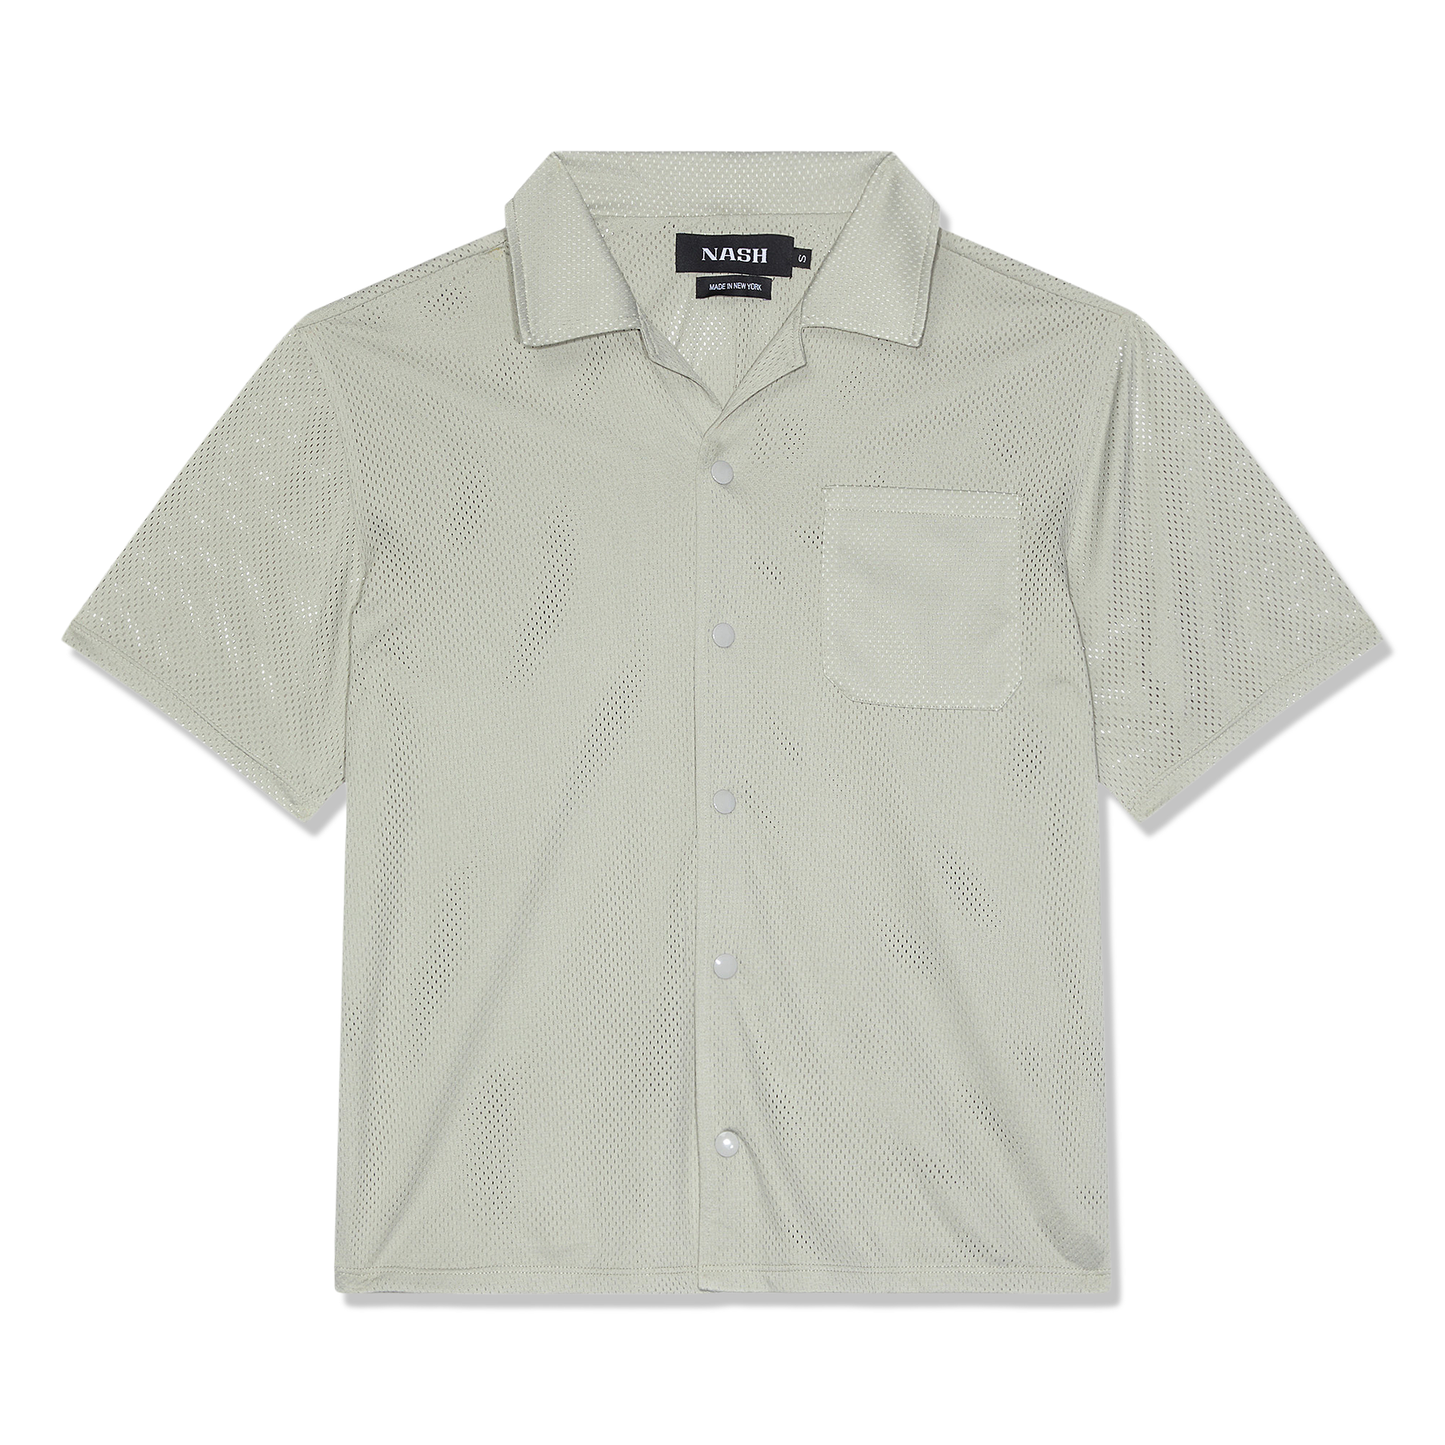 NASH Vent Short Sleeve Shirt (Cement Grey)